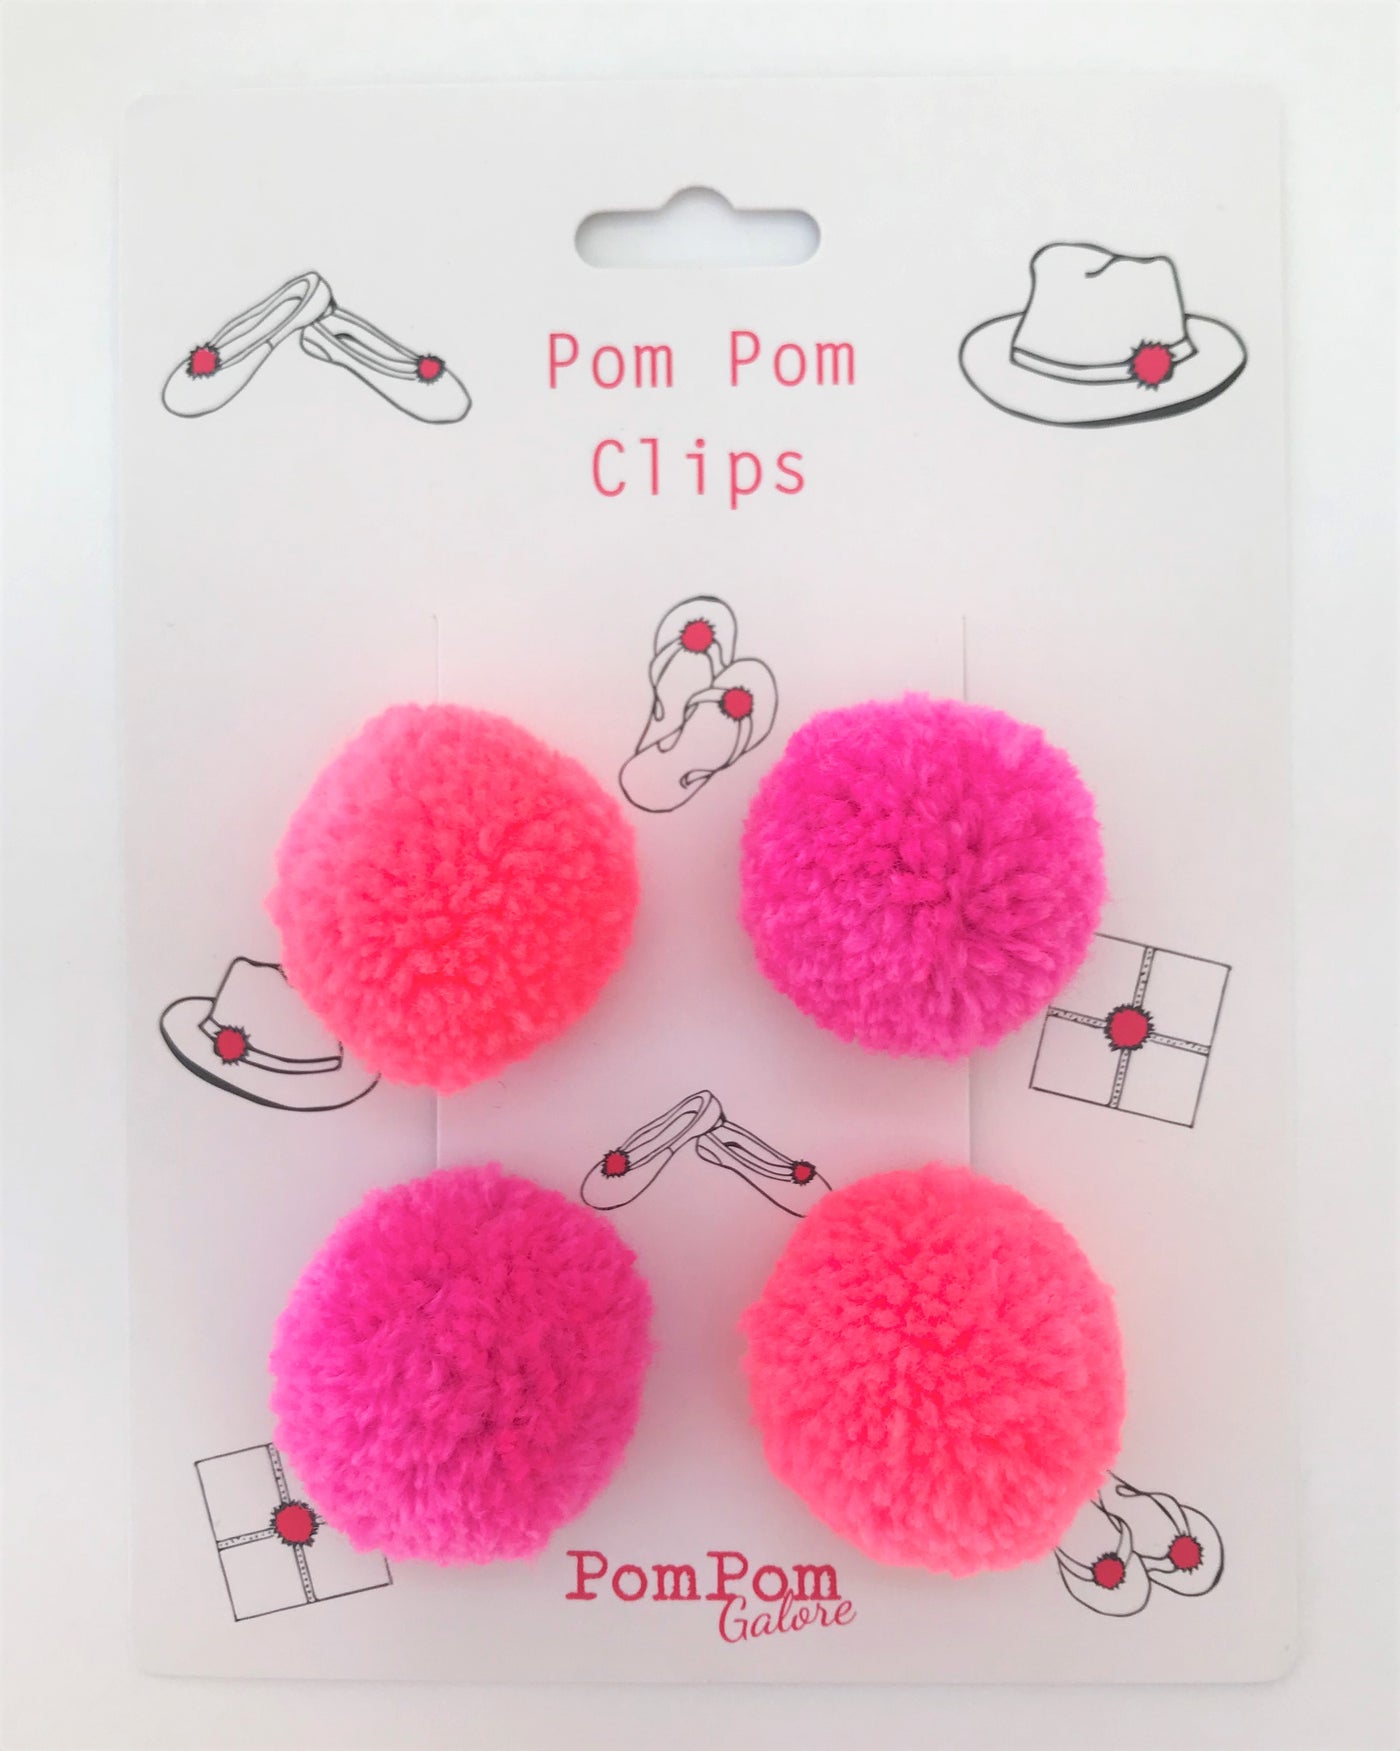 Hot Pink & Bright Orange Pom Pom Clips - Set of 4